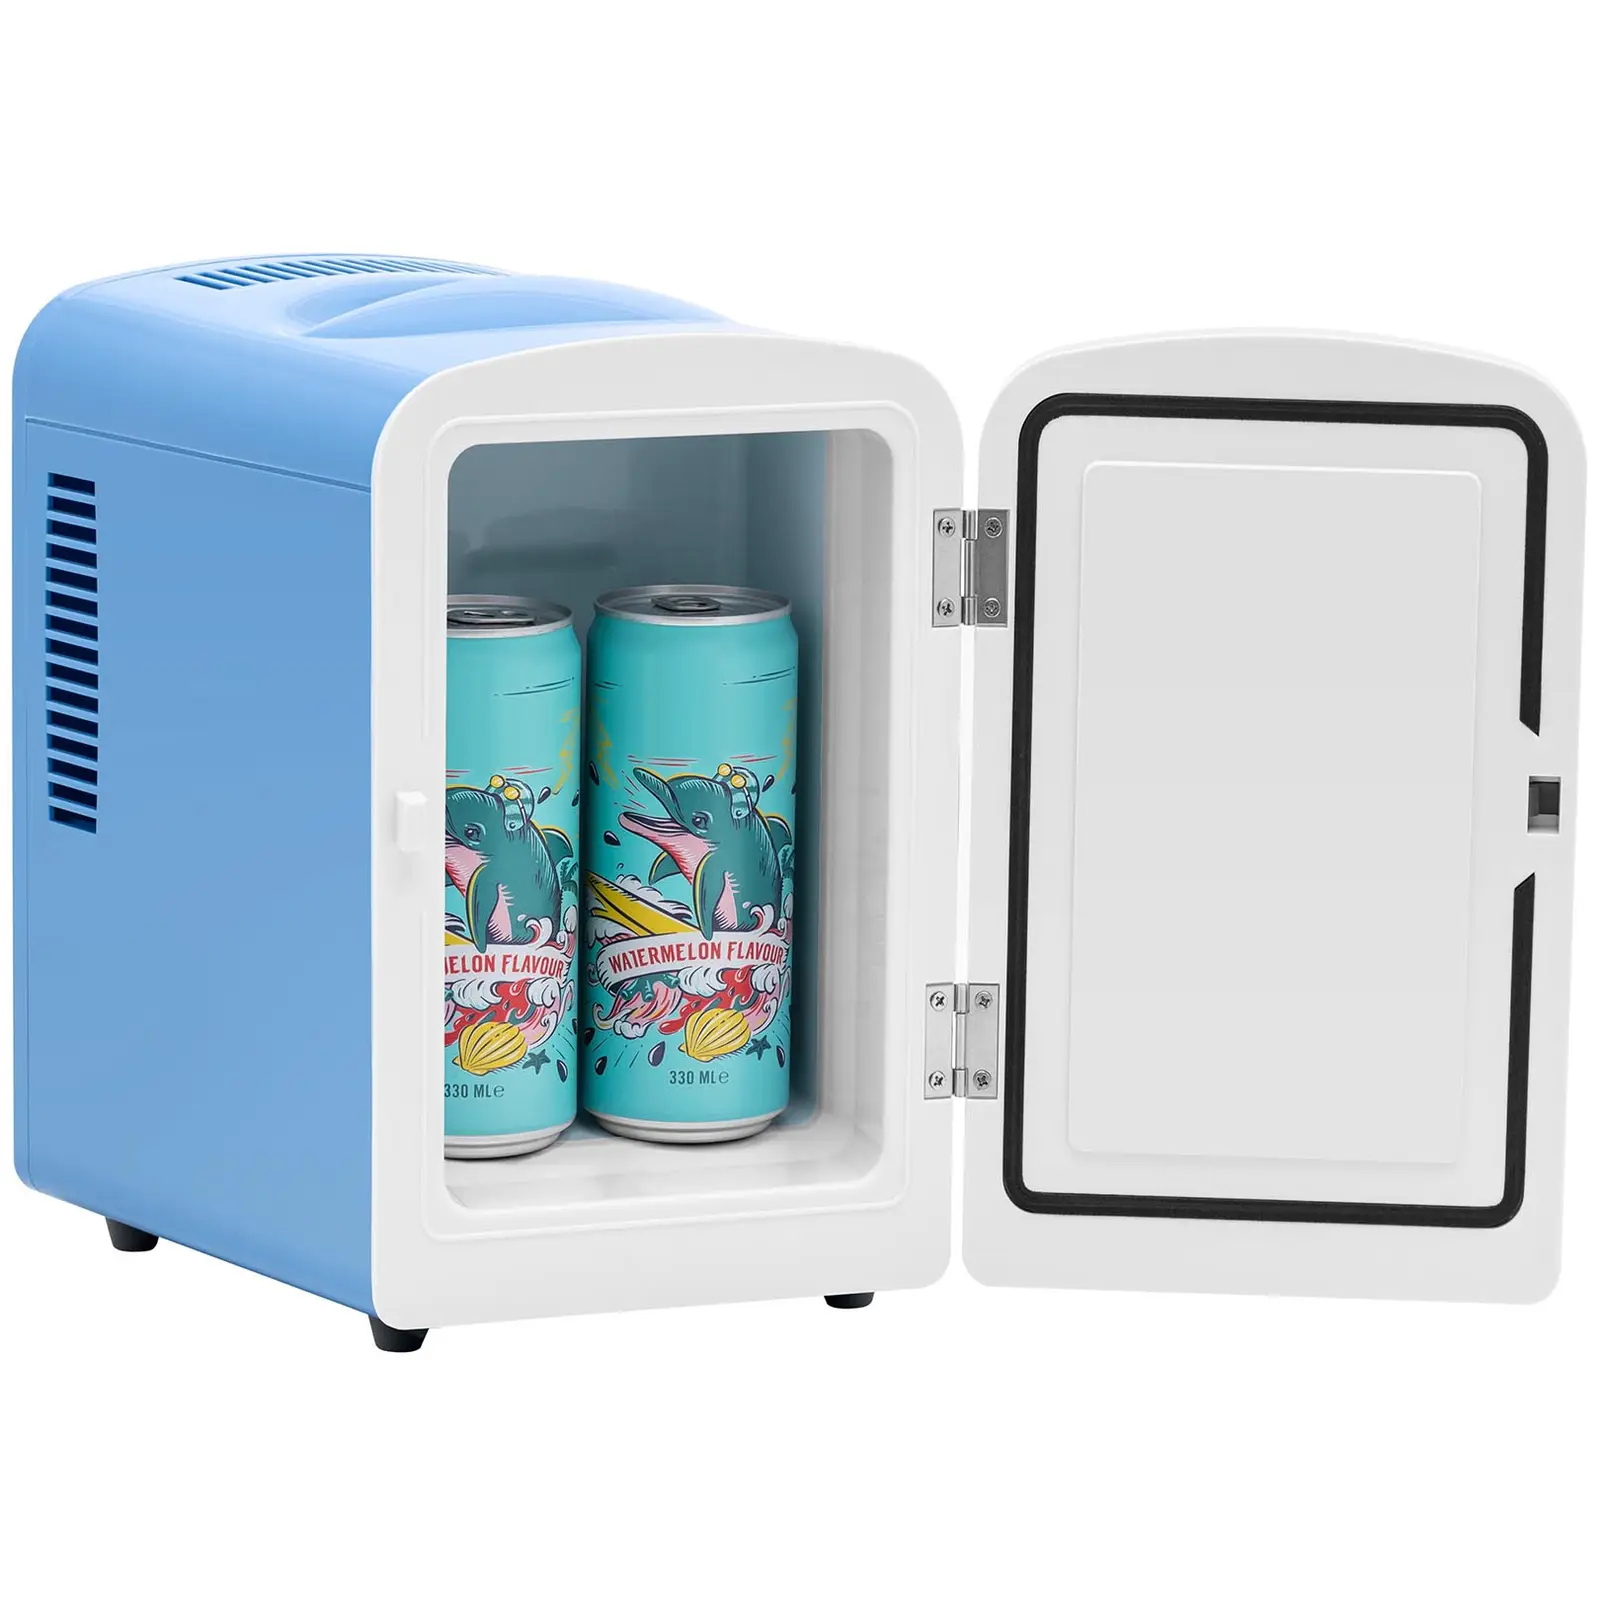 Mini-Kühlschrank 12 V / 230 V - 2-in-1-Gerät mit Warmhaltefunktion - 4 L - Blau - 2